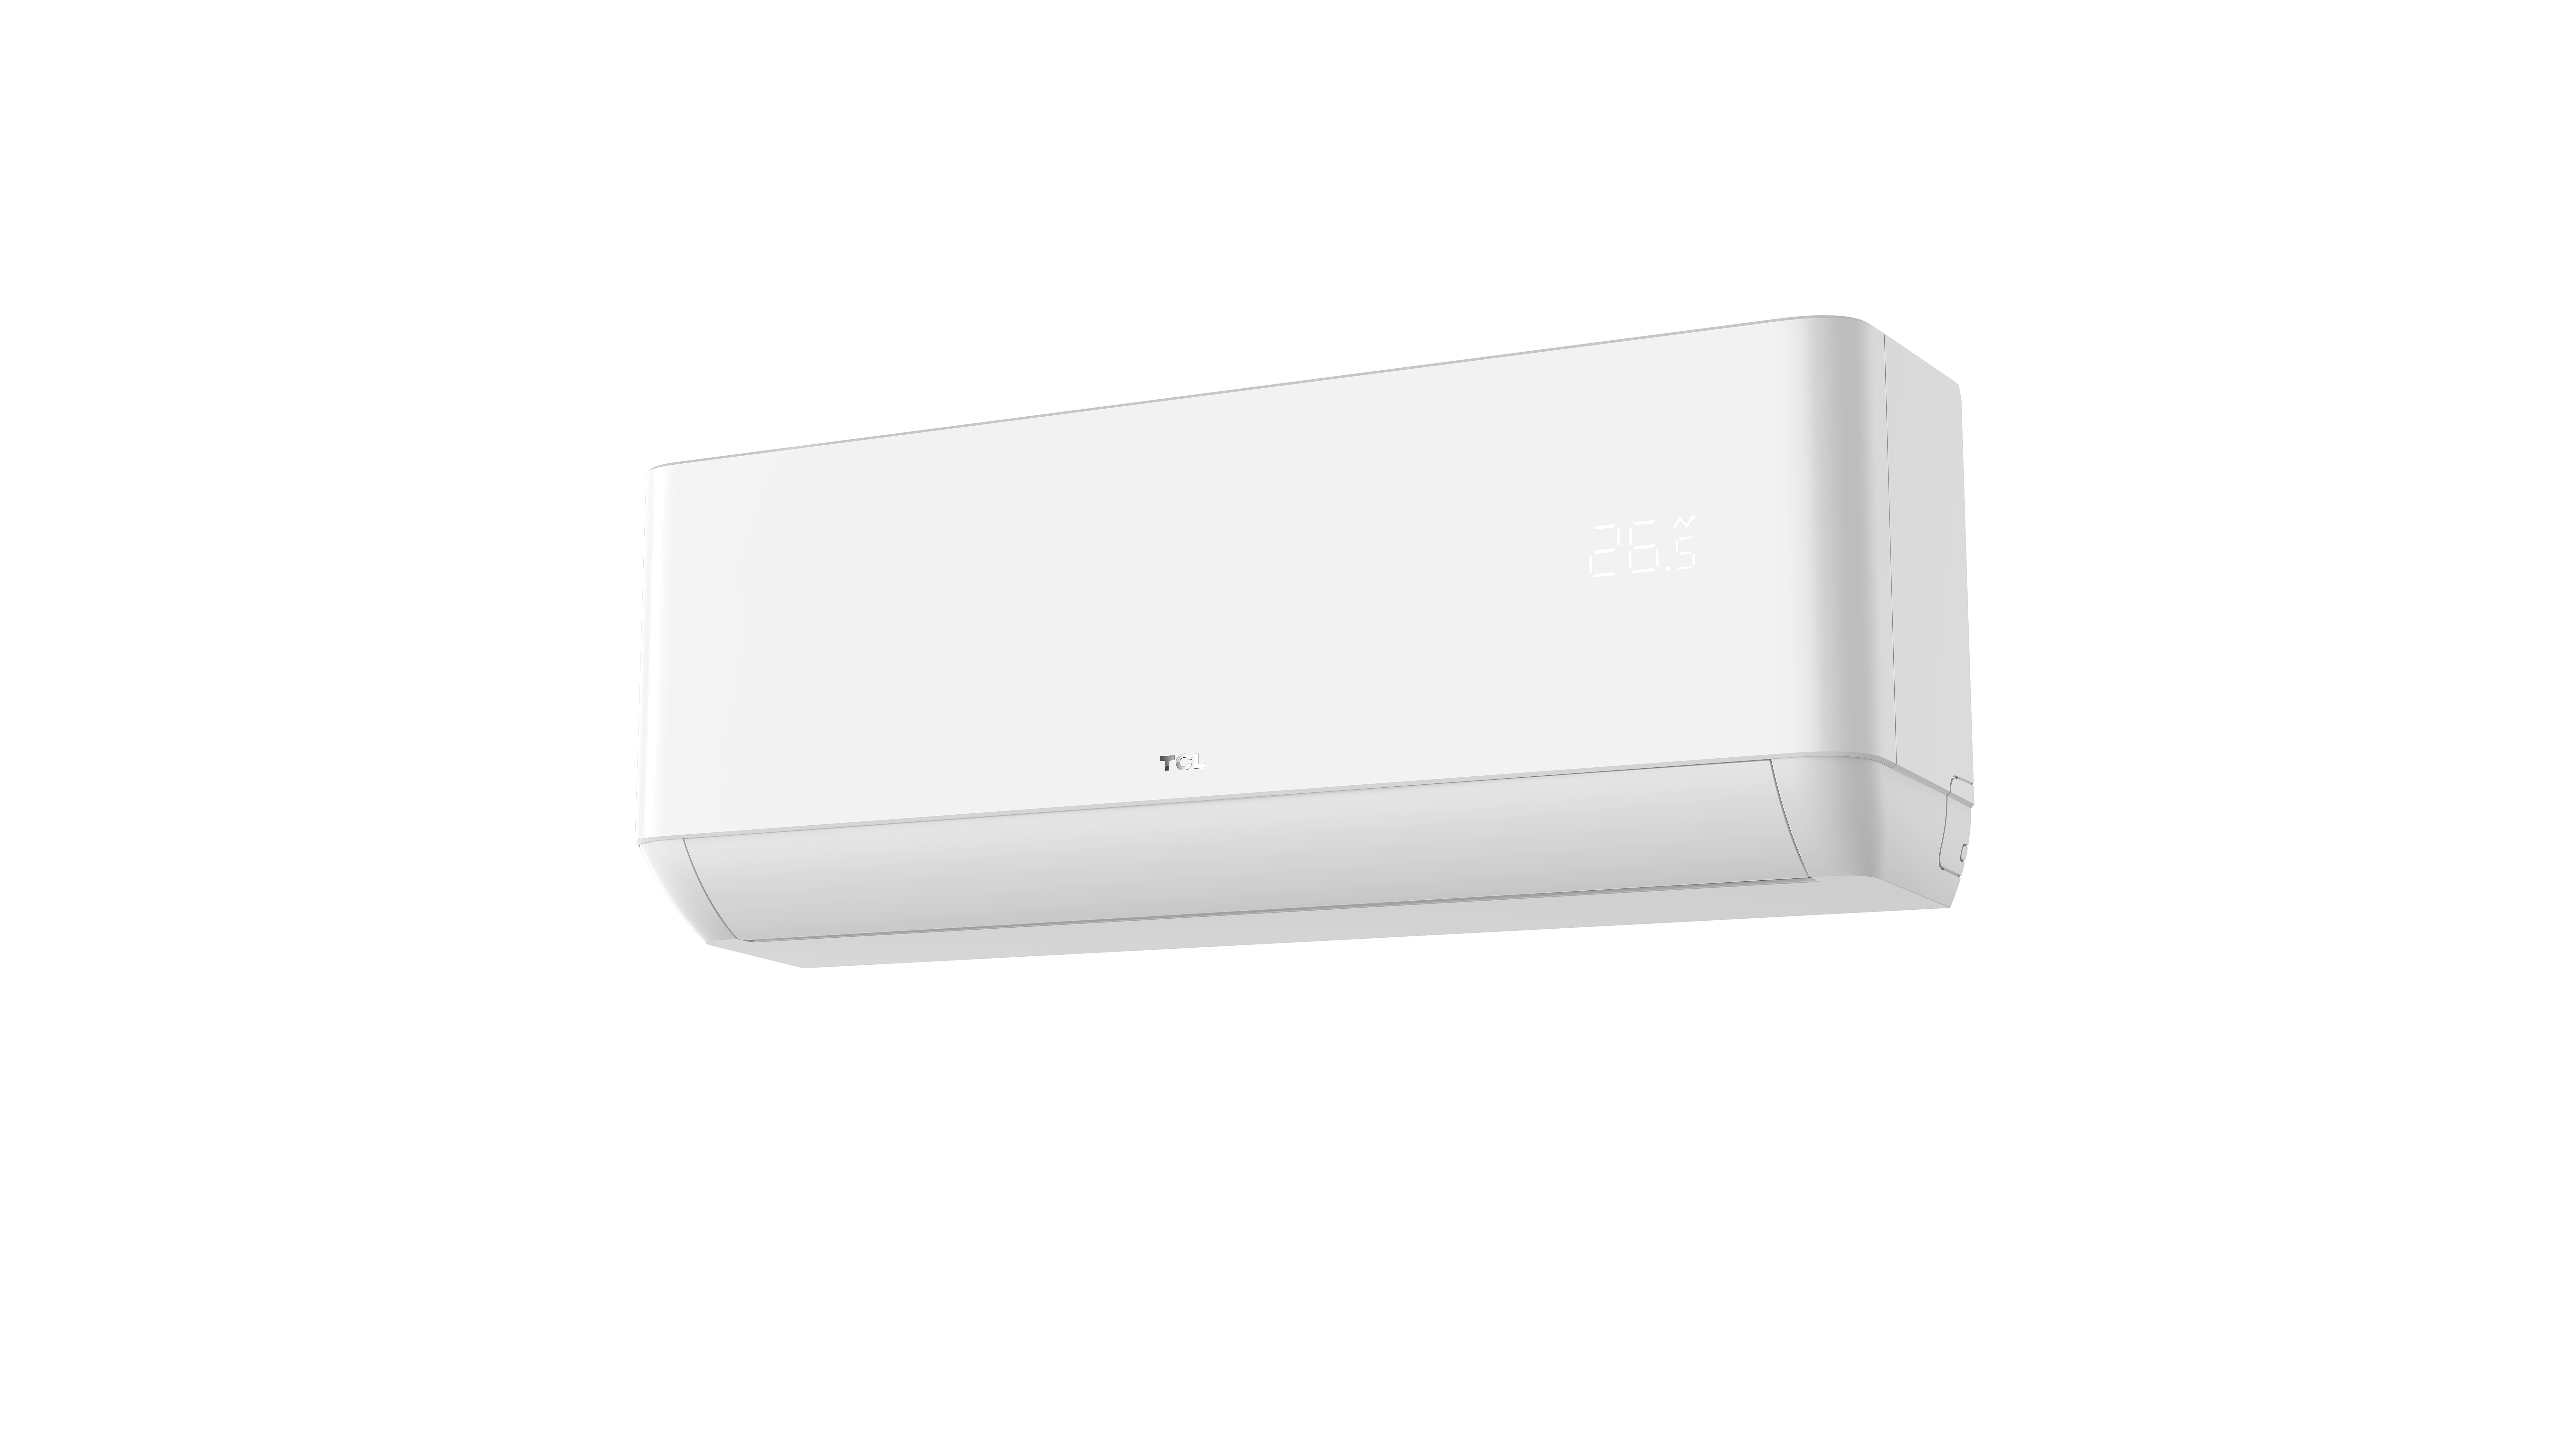 TCL空调 大1.5匹 新一级 变频冷暖 节能自清洁壁挂式空调KFR-35GW/AD1a+B1 标准安装